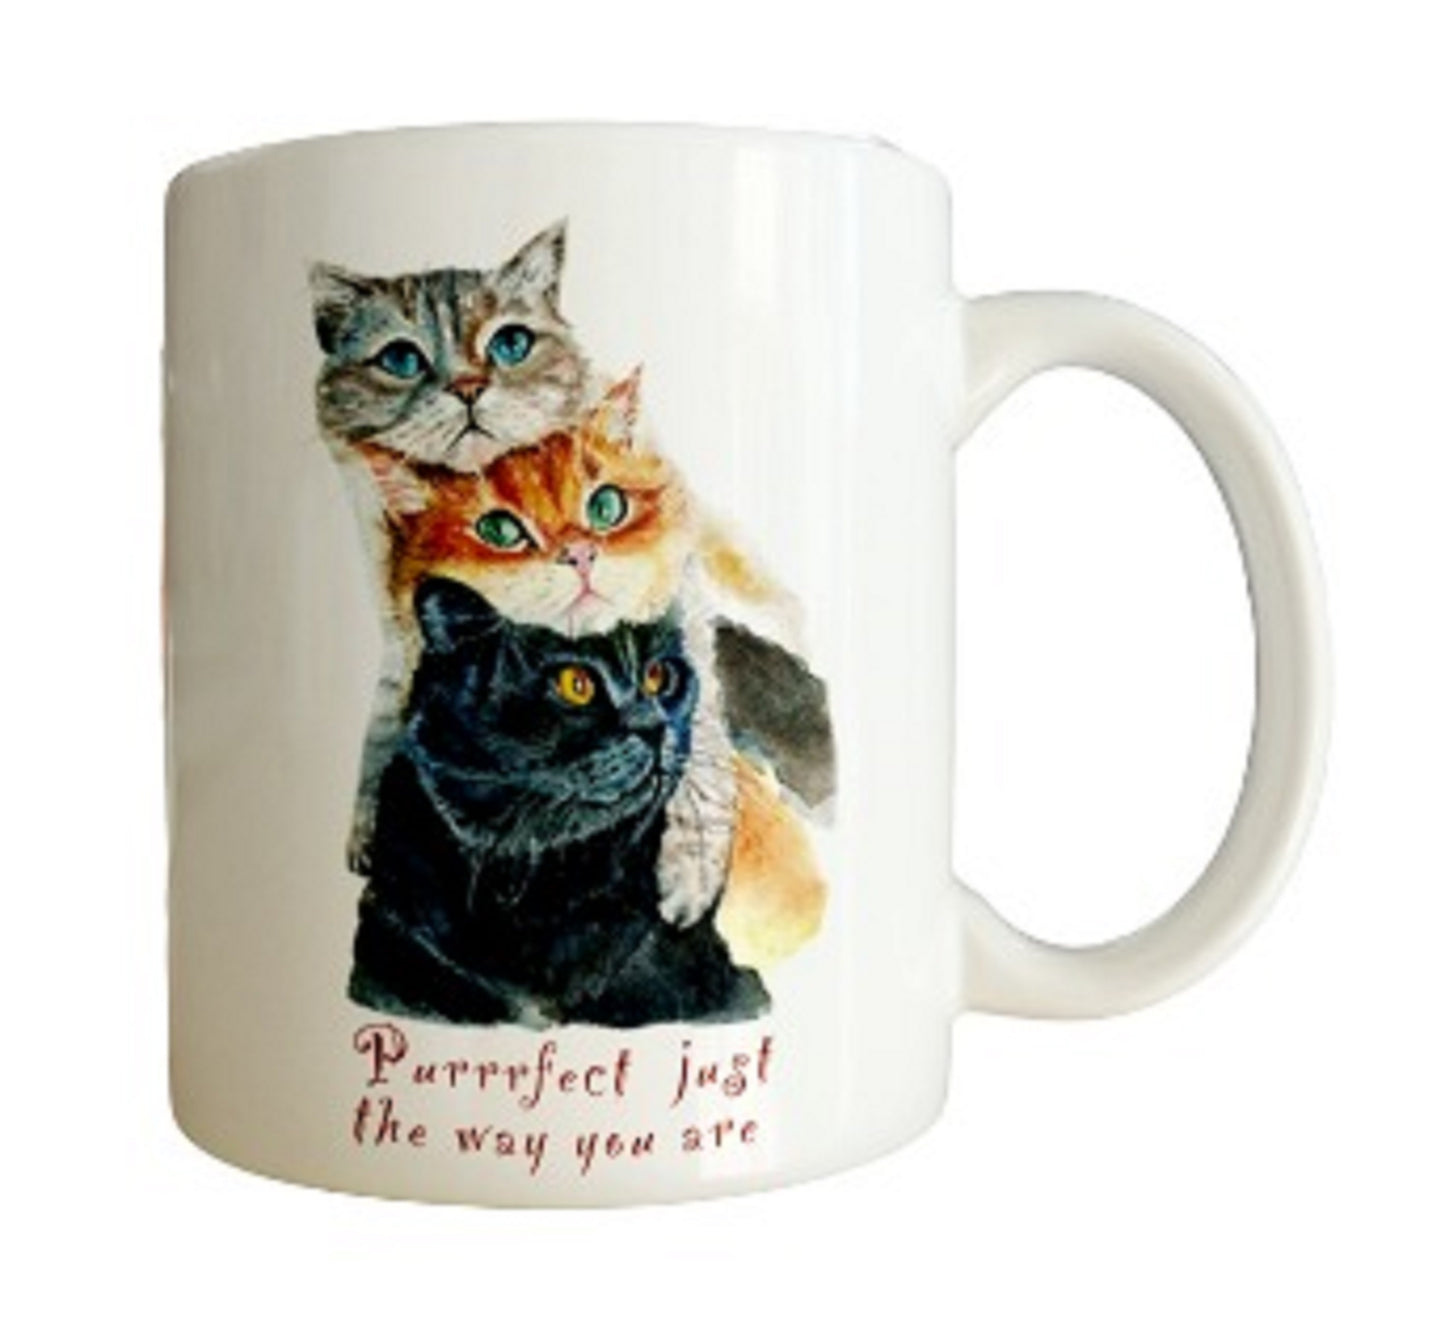  Purrrfect Cat Stack Coffee Mug by Free Spirit Accessories sold by Free Spirit Accessories